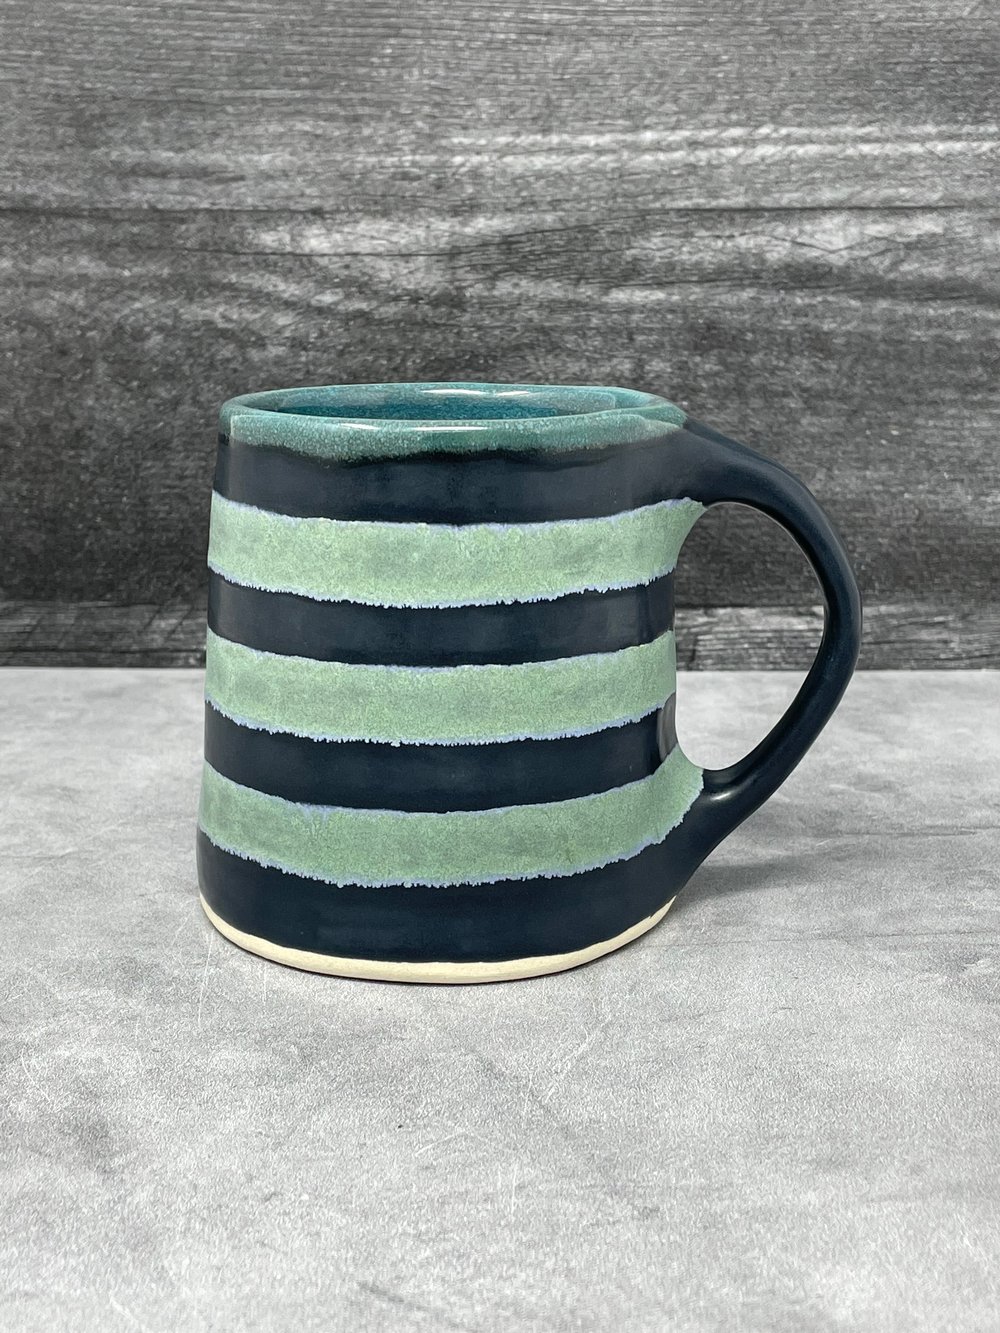 Image of Stripes Mug AVAILABLE AT SALTSTONE CERAMICS